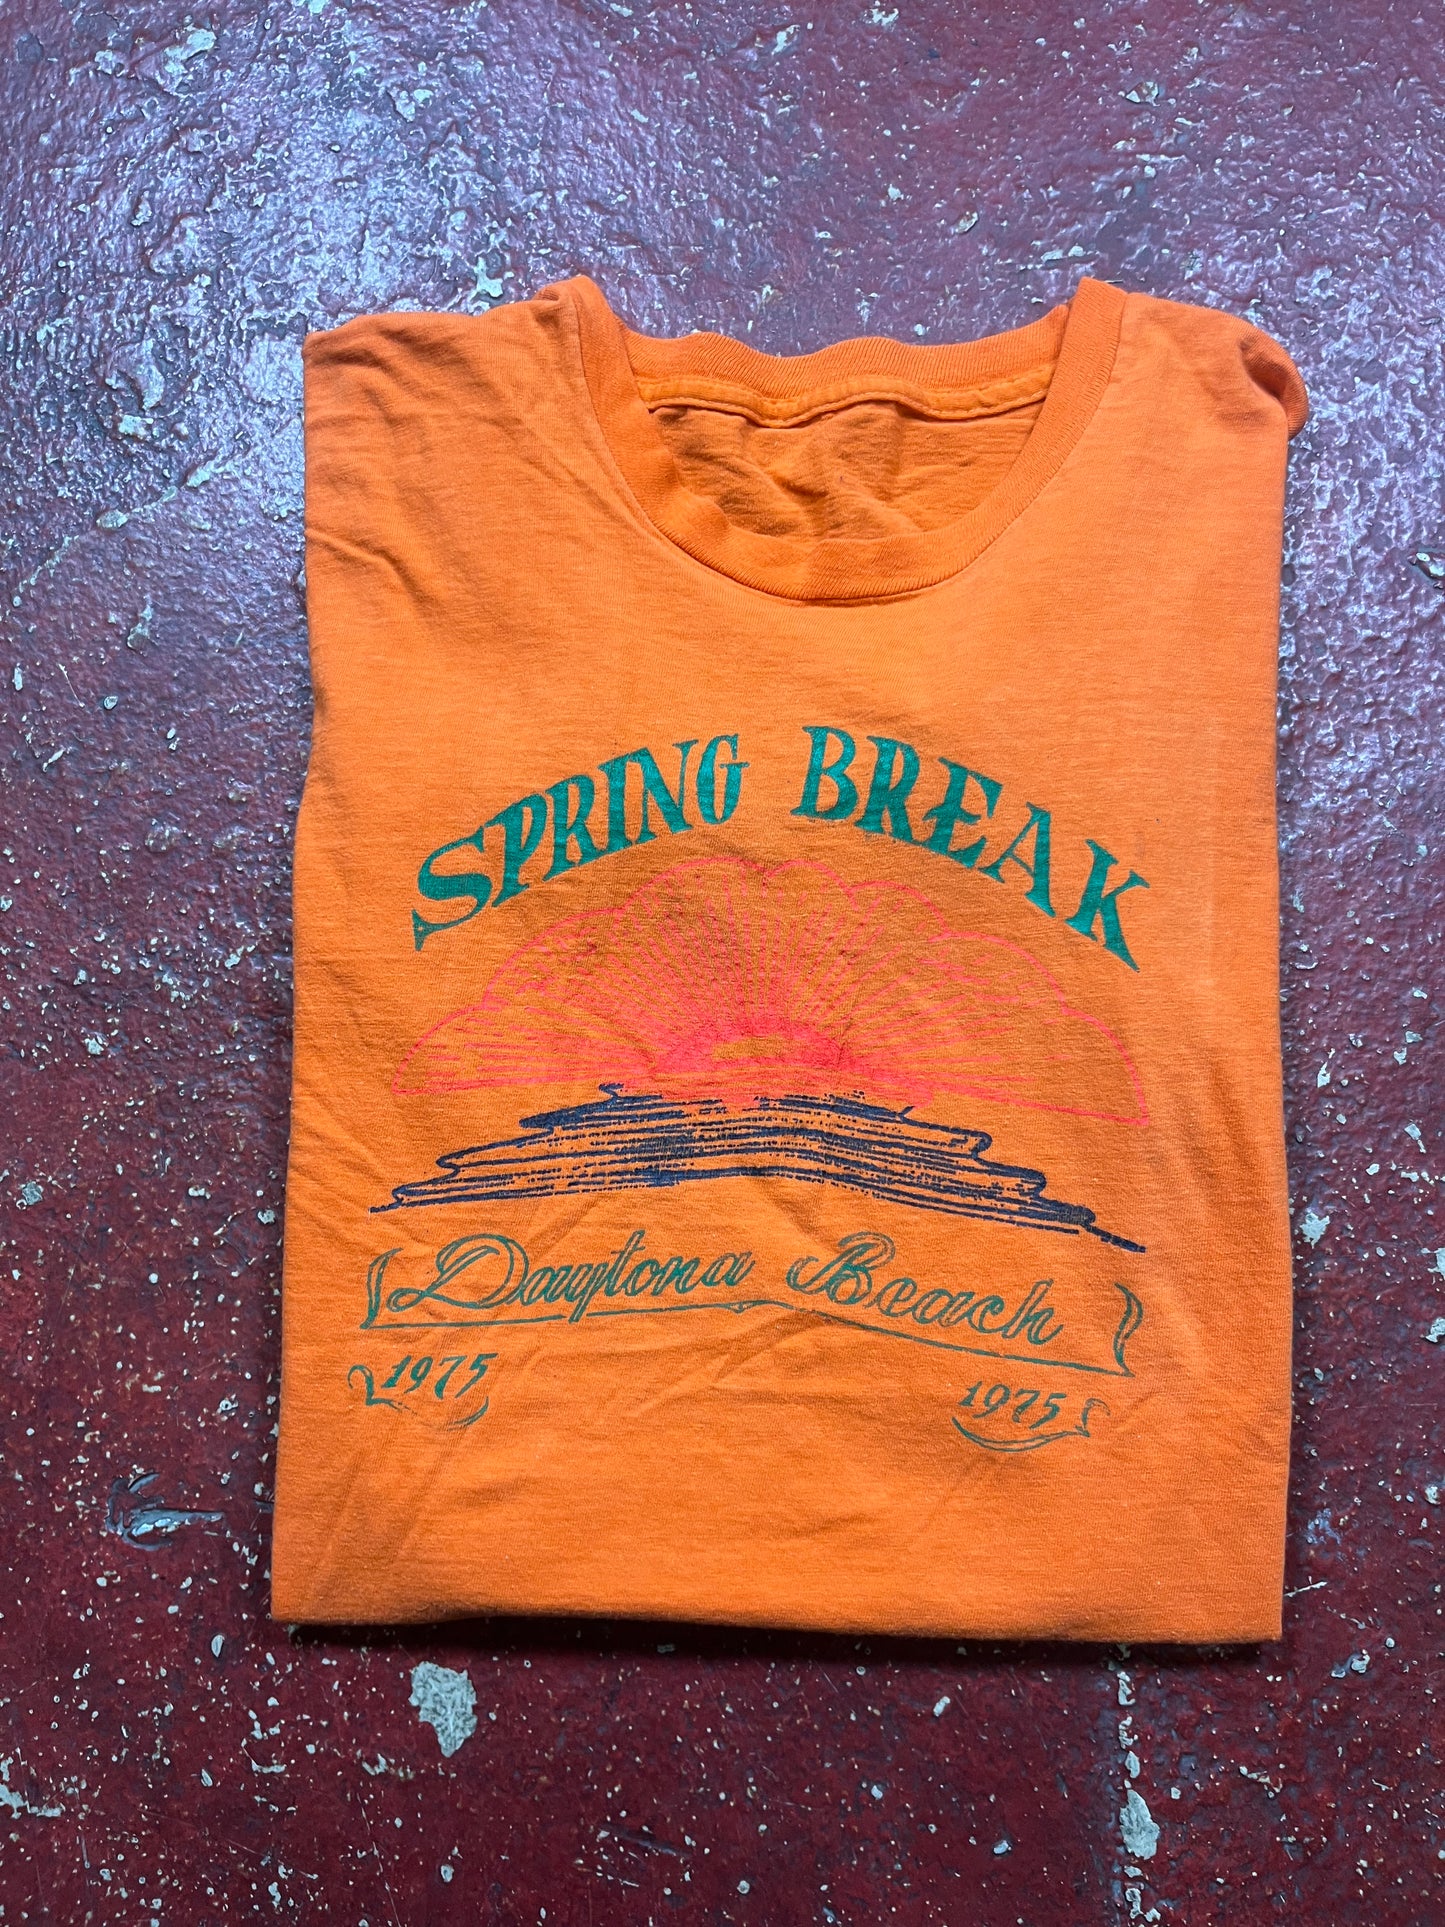 1975 Daytona Spring Break Tee